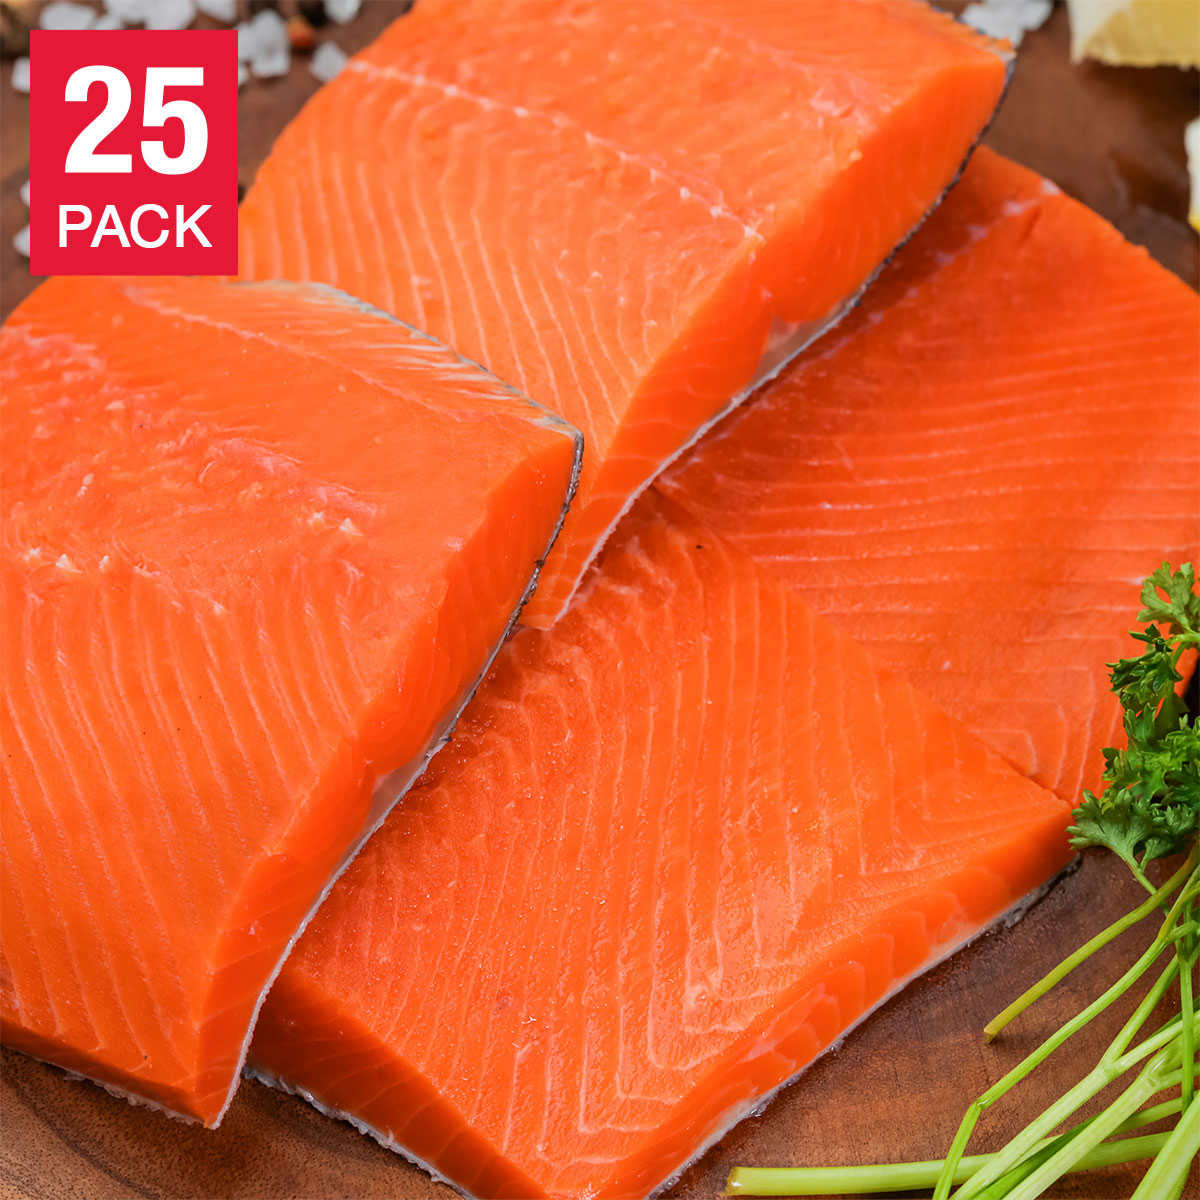 Northwest Fish Wild Alaskan Sockeye Salmon Fillets 4 6 Oz Portions Minimum 25 Count 10 Lbs,Is Soy Milk Healthy For You